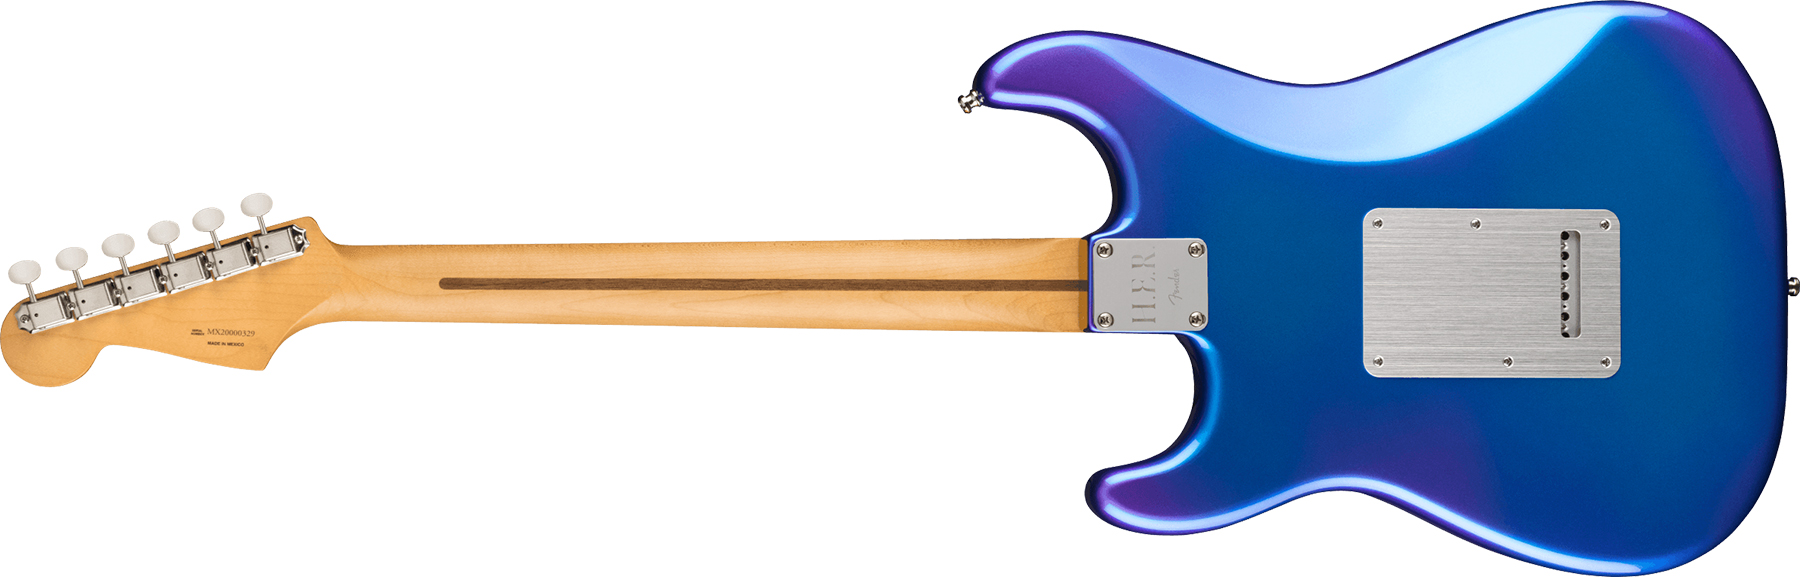 Fender H.e.r. Strat Ltd Signature Mex 3s Trem Mn - Blue Marlin - Str shape electric guitar - Variation 1